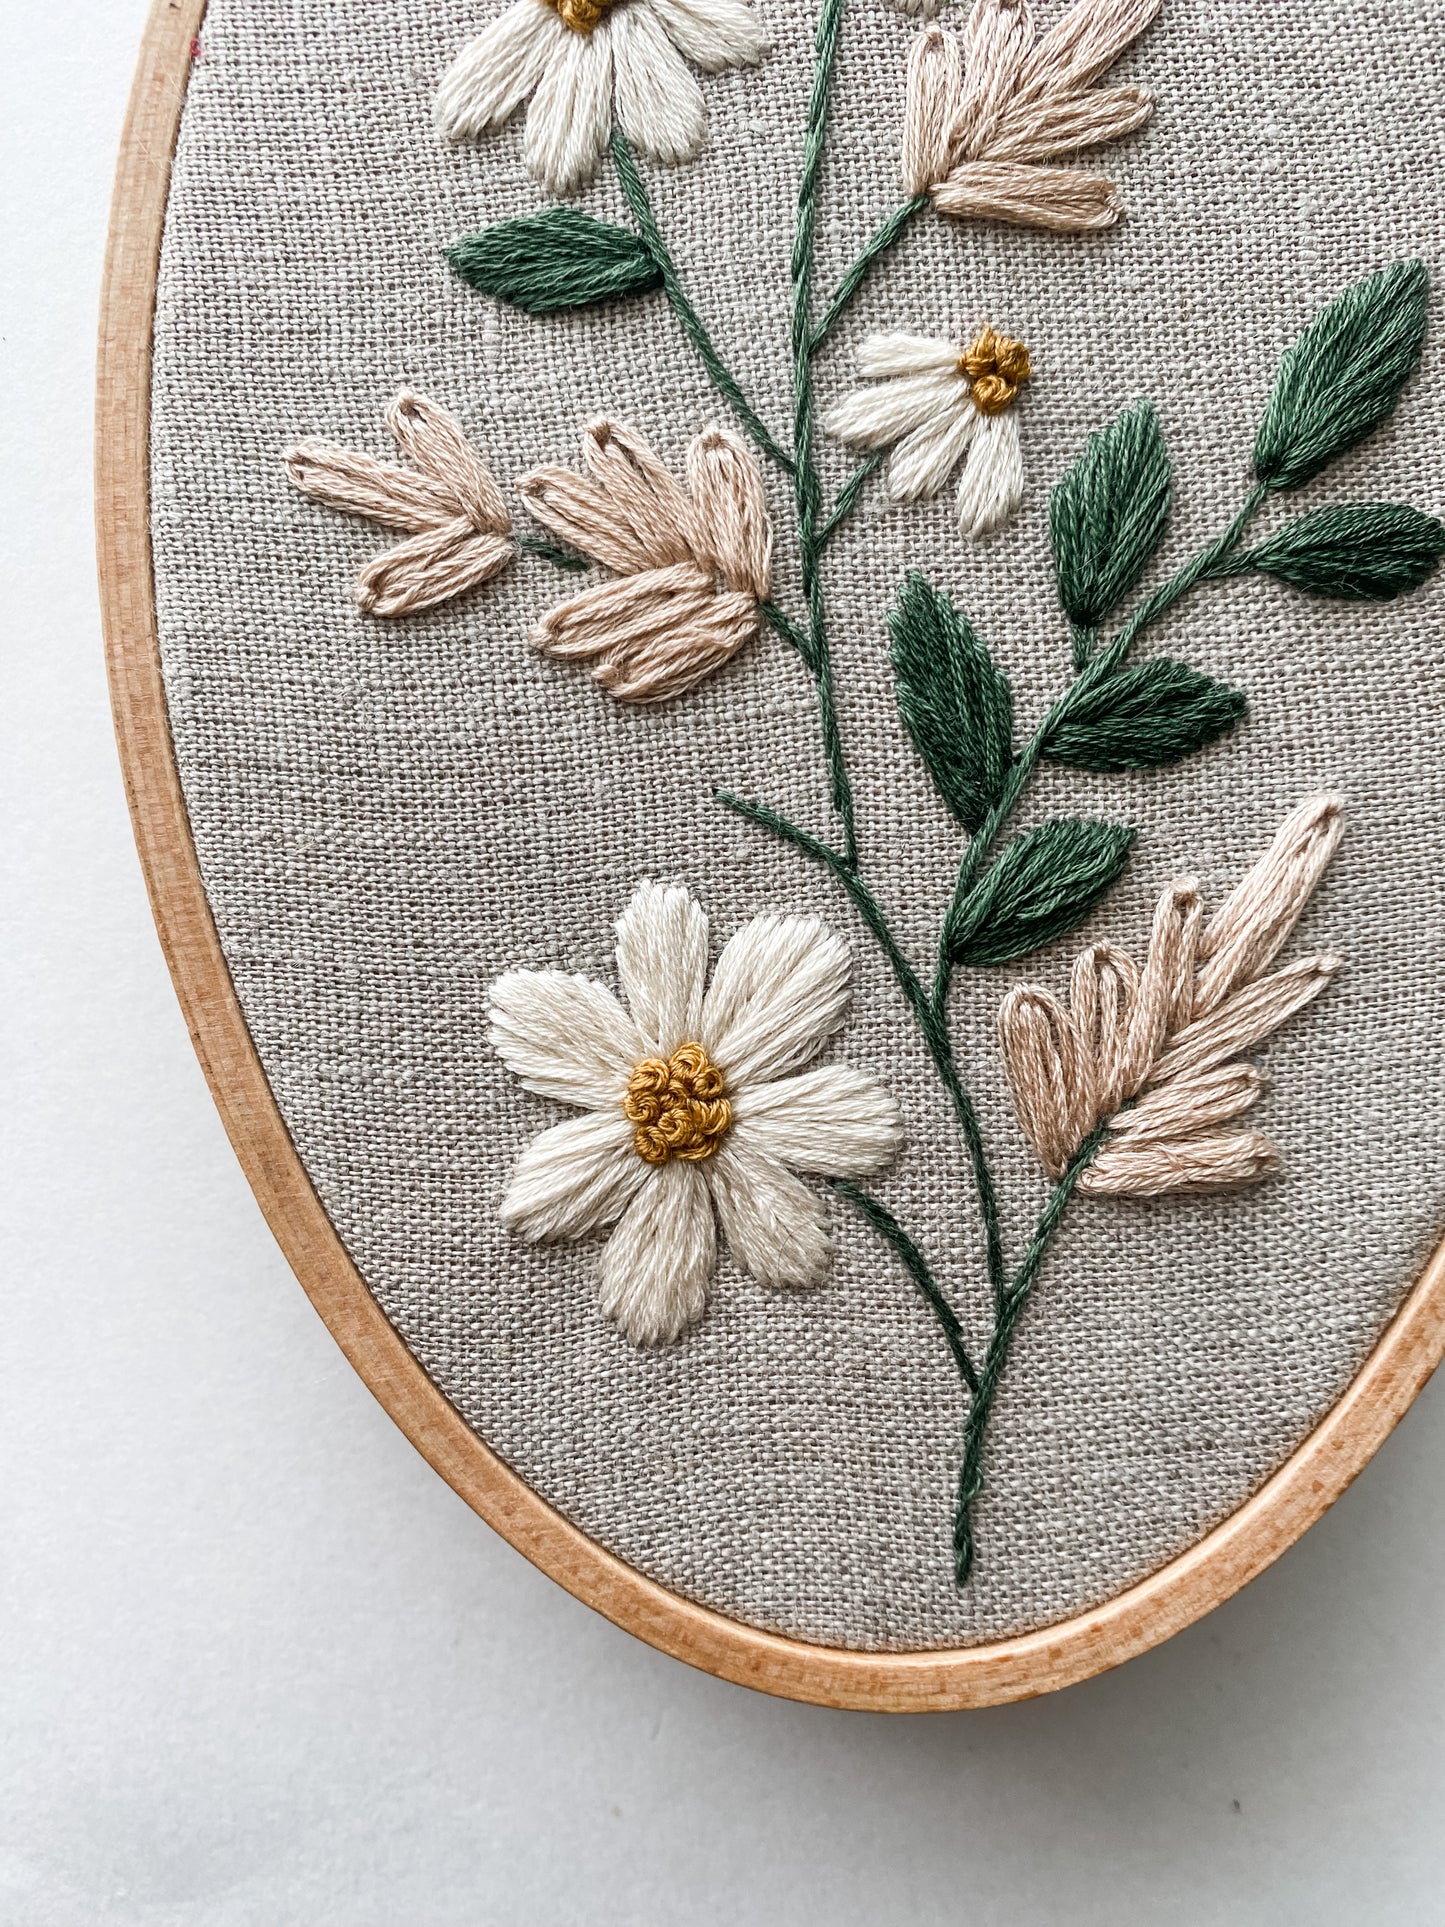 Daisy Sprig Embroidery Kit